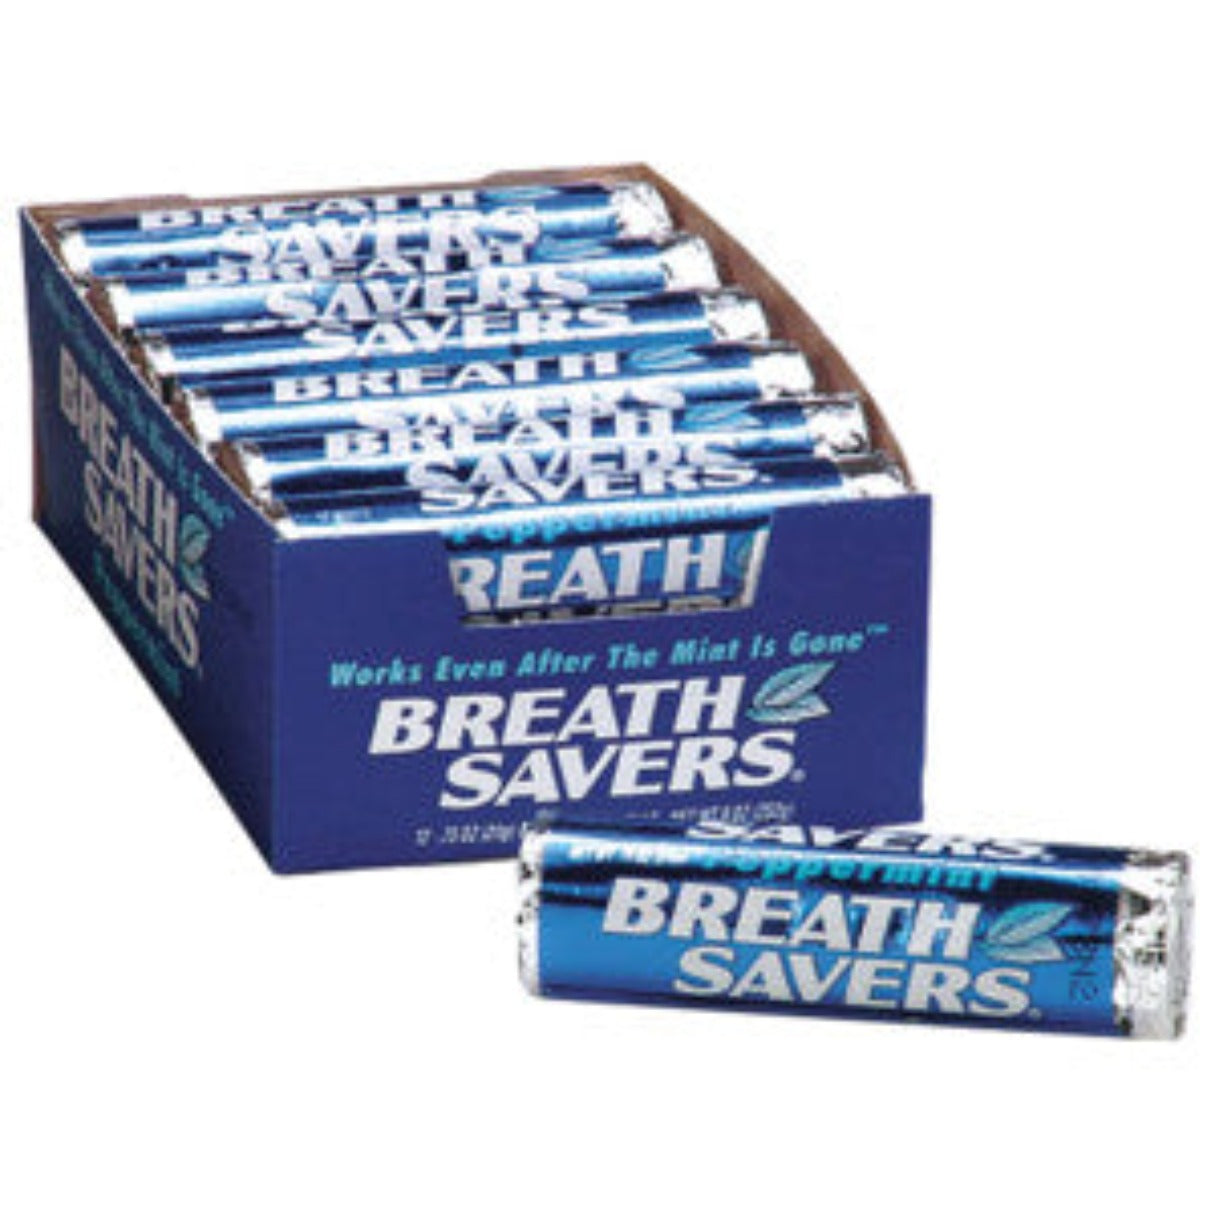 BreathSavers Mints Peppermint - 24ct